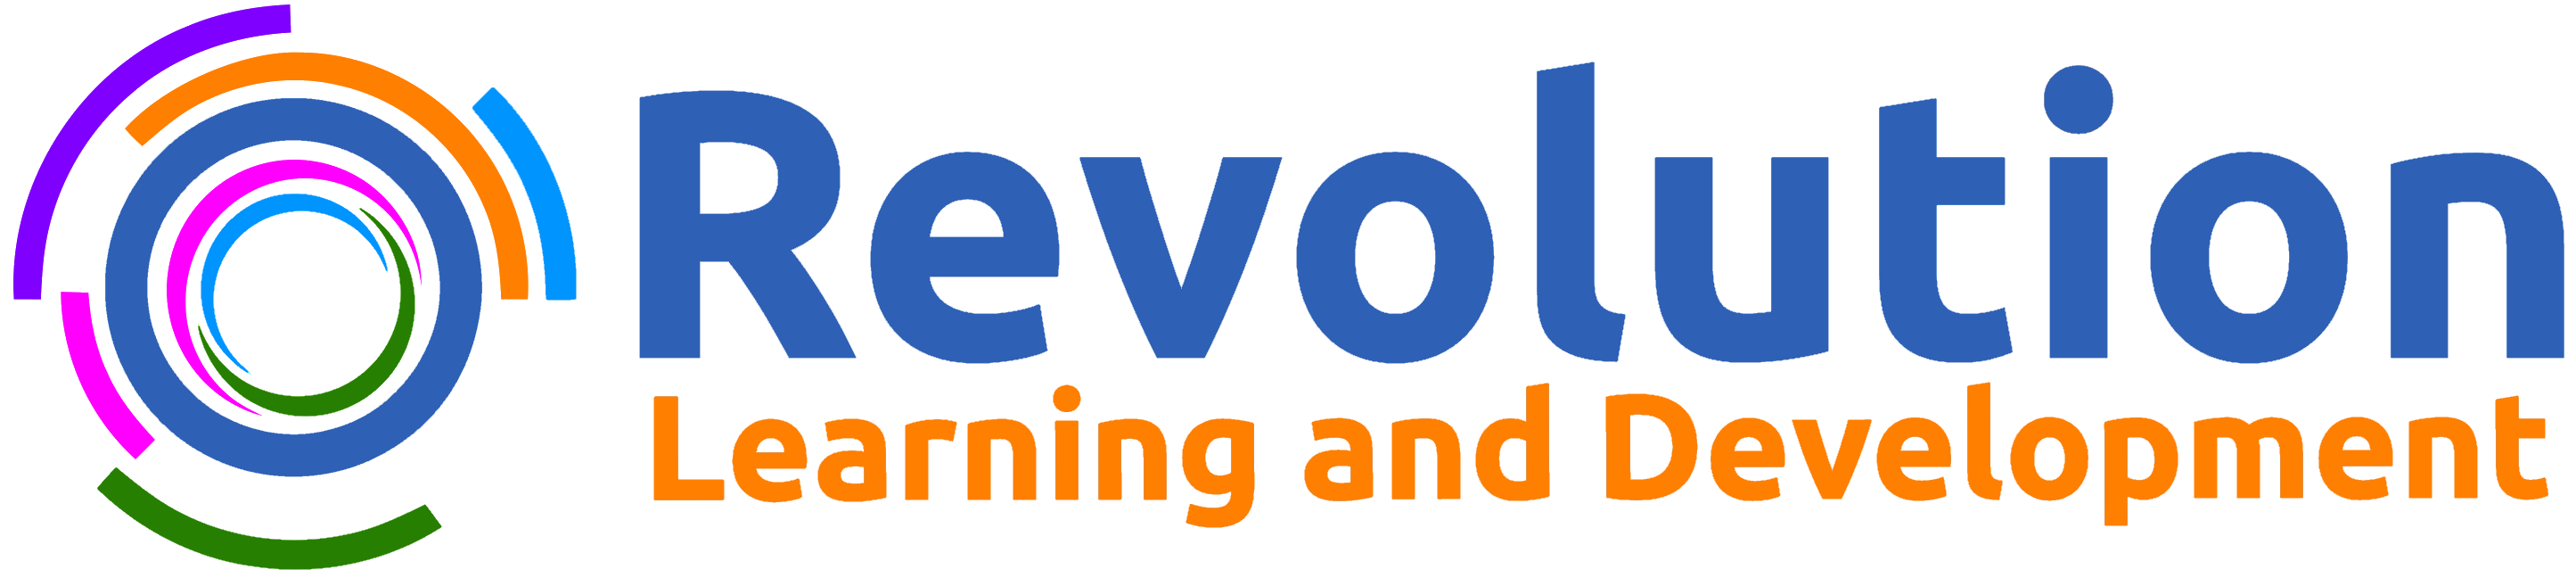 Revolution Learning and Development – Spain